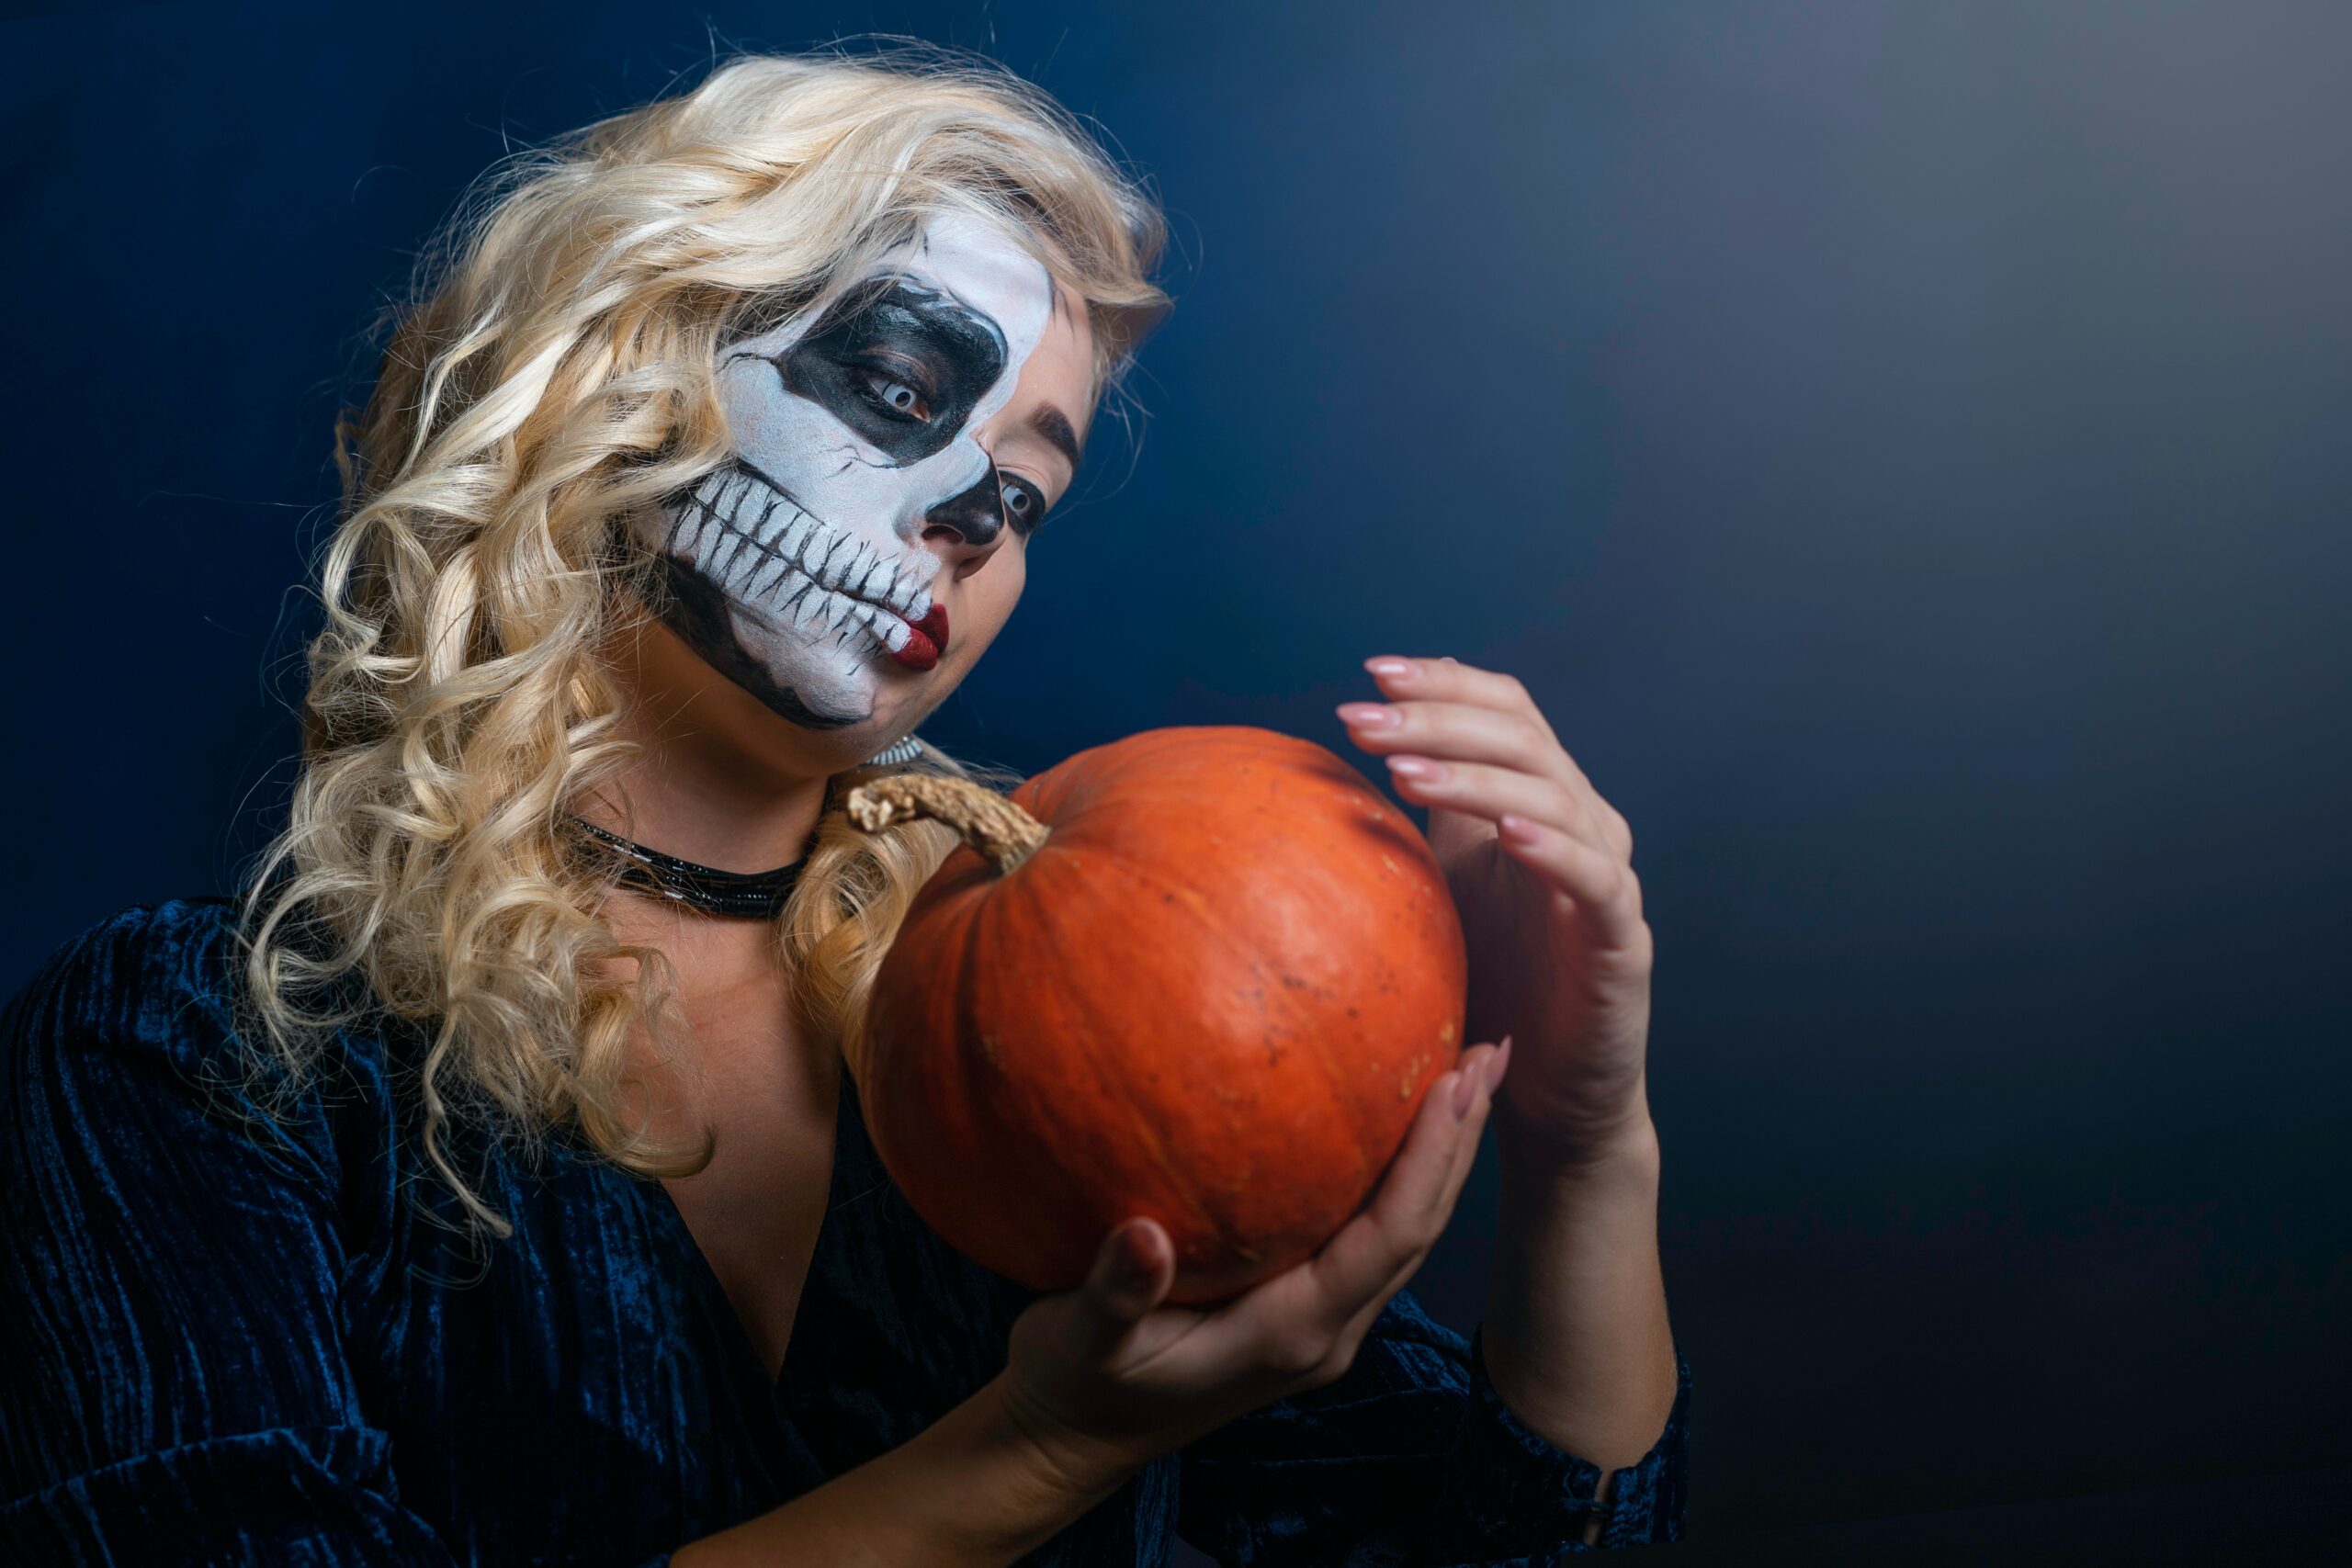 Woman wearing skull makeup and holding a pumpkin